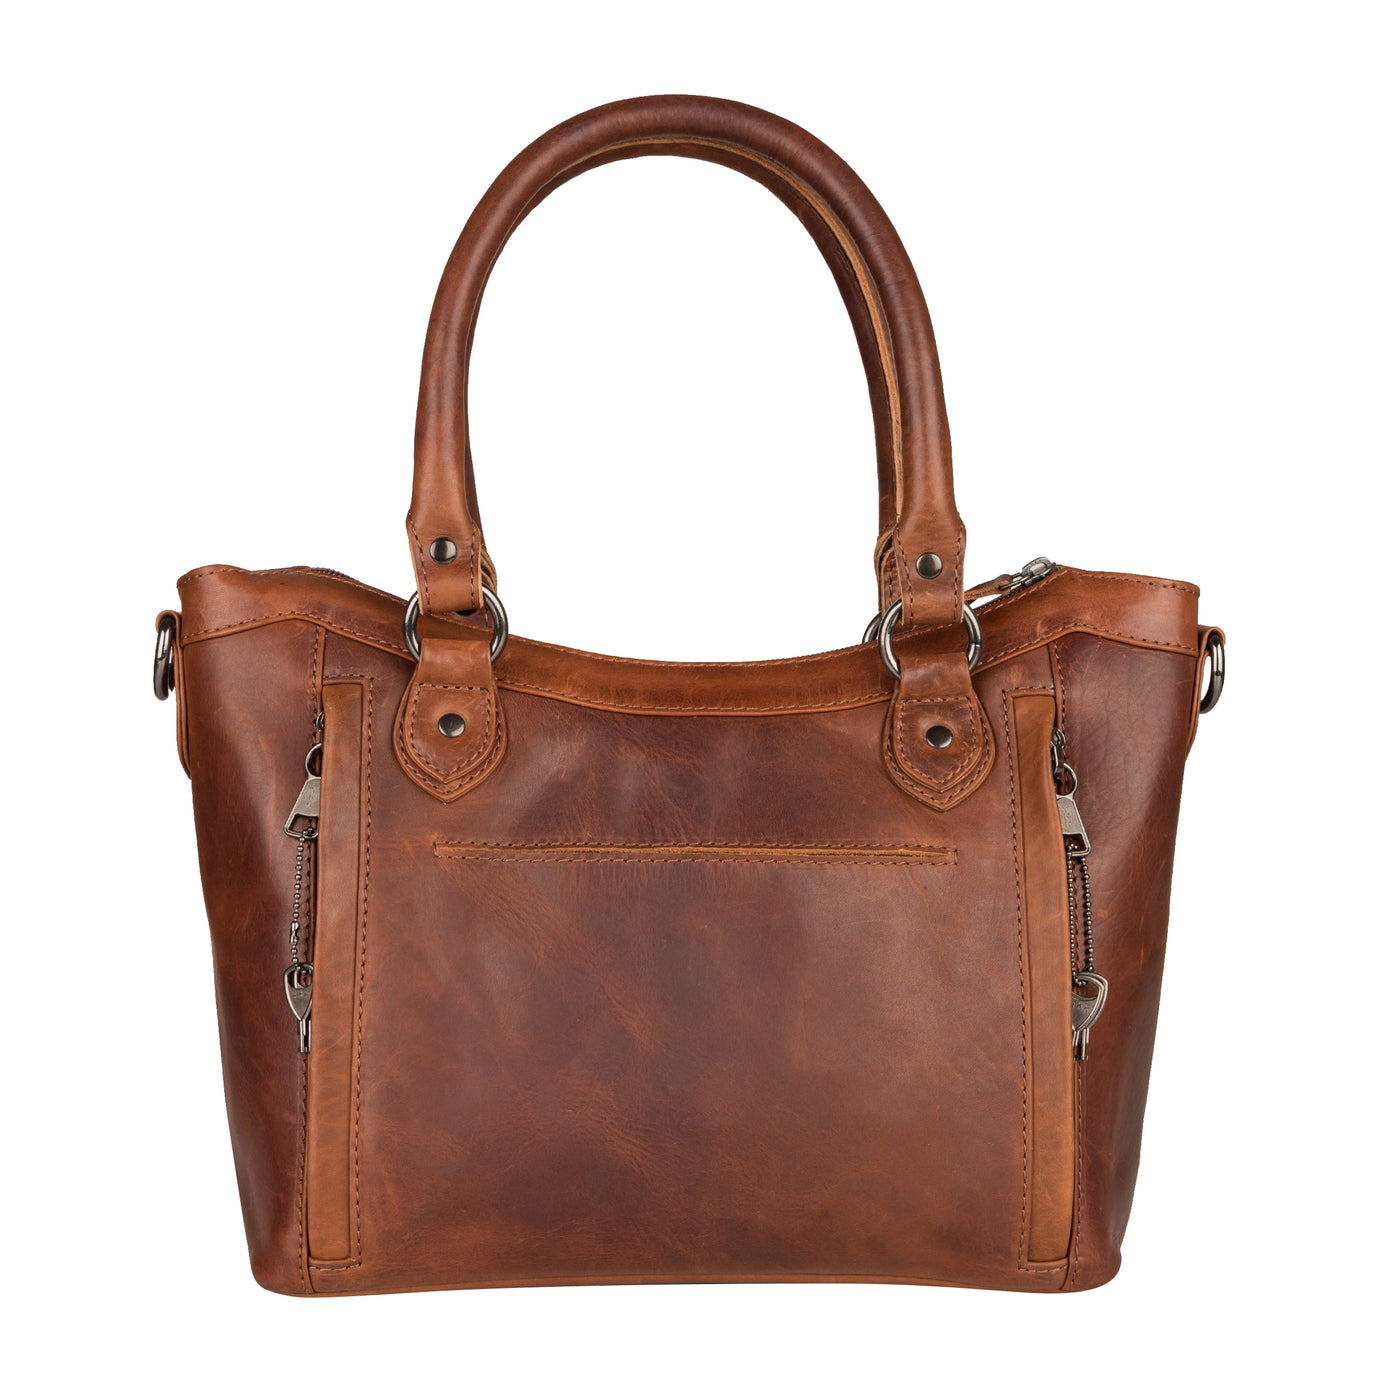 Hammitt - Designer Handbags On Sale | The Charming Olive by Adelina Perrin